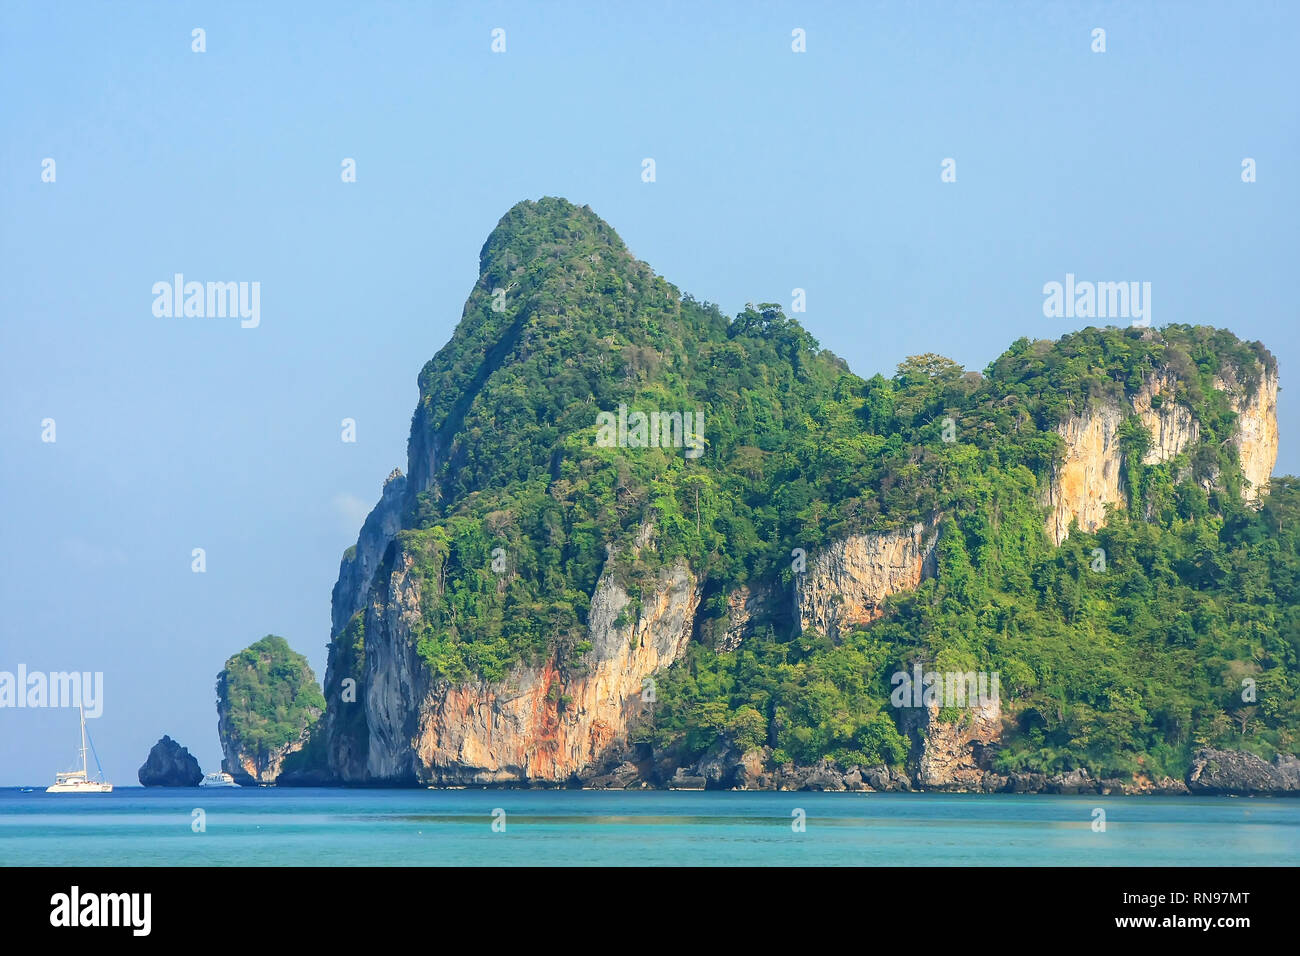 Kalkstein-Klippen der Insel Phi Phi Don, Provinz Krabi, Thailand. Koh Phi Phi Don ist Teil eines marine National Park. Stockfoto